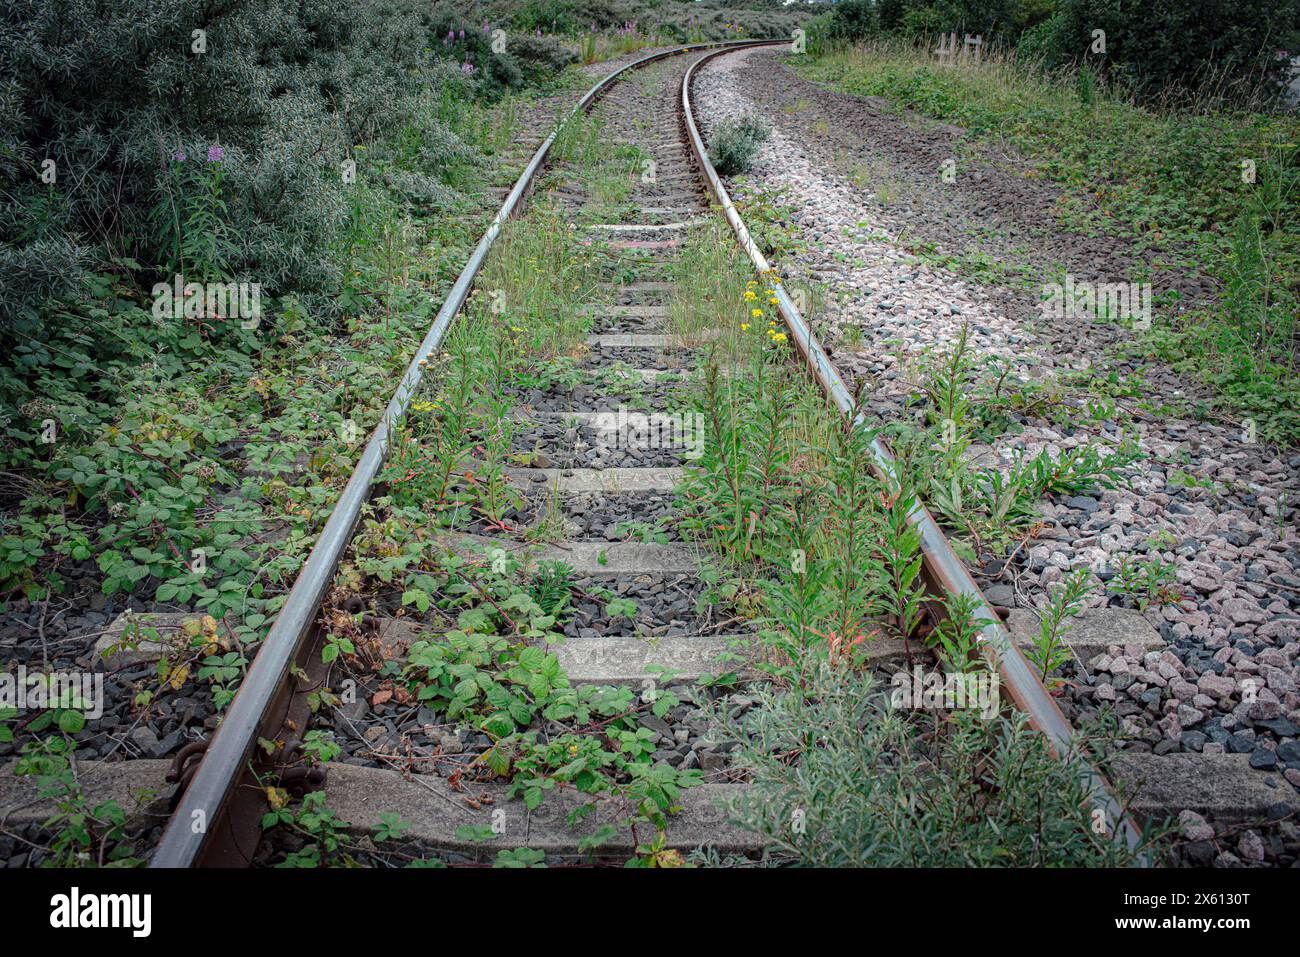 Weeds growing over old railway track Stock Photo